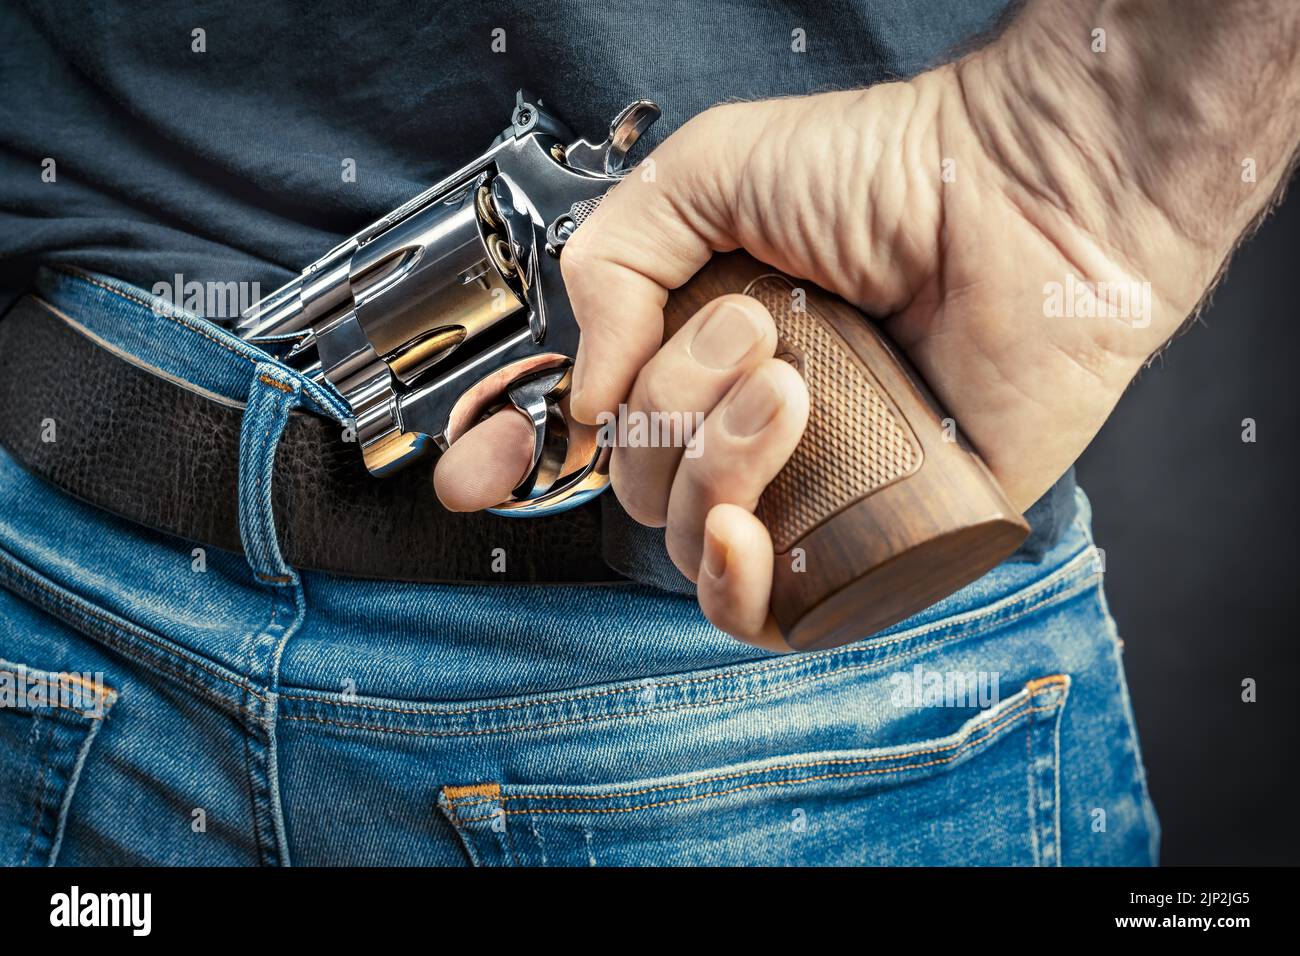 revolver, armed, violent, kurzwaffe, revolvers, armeds Stock Photo